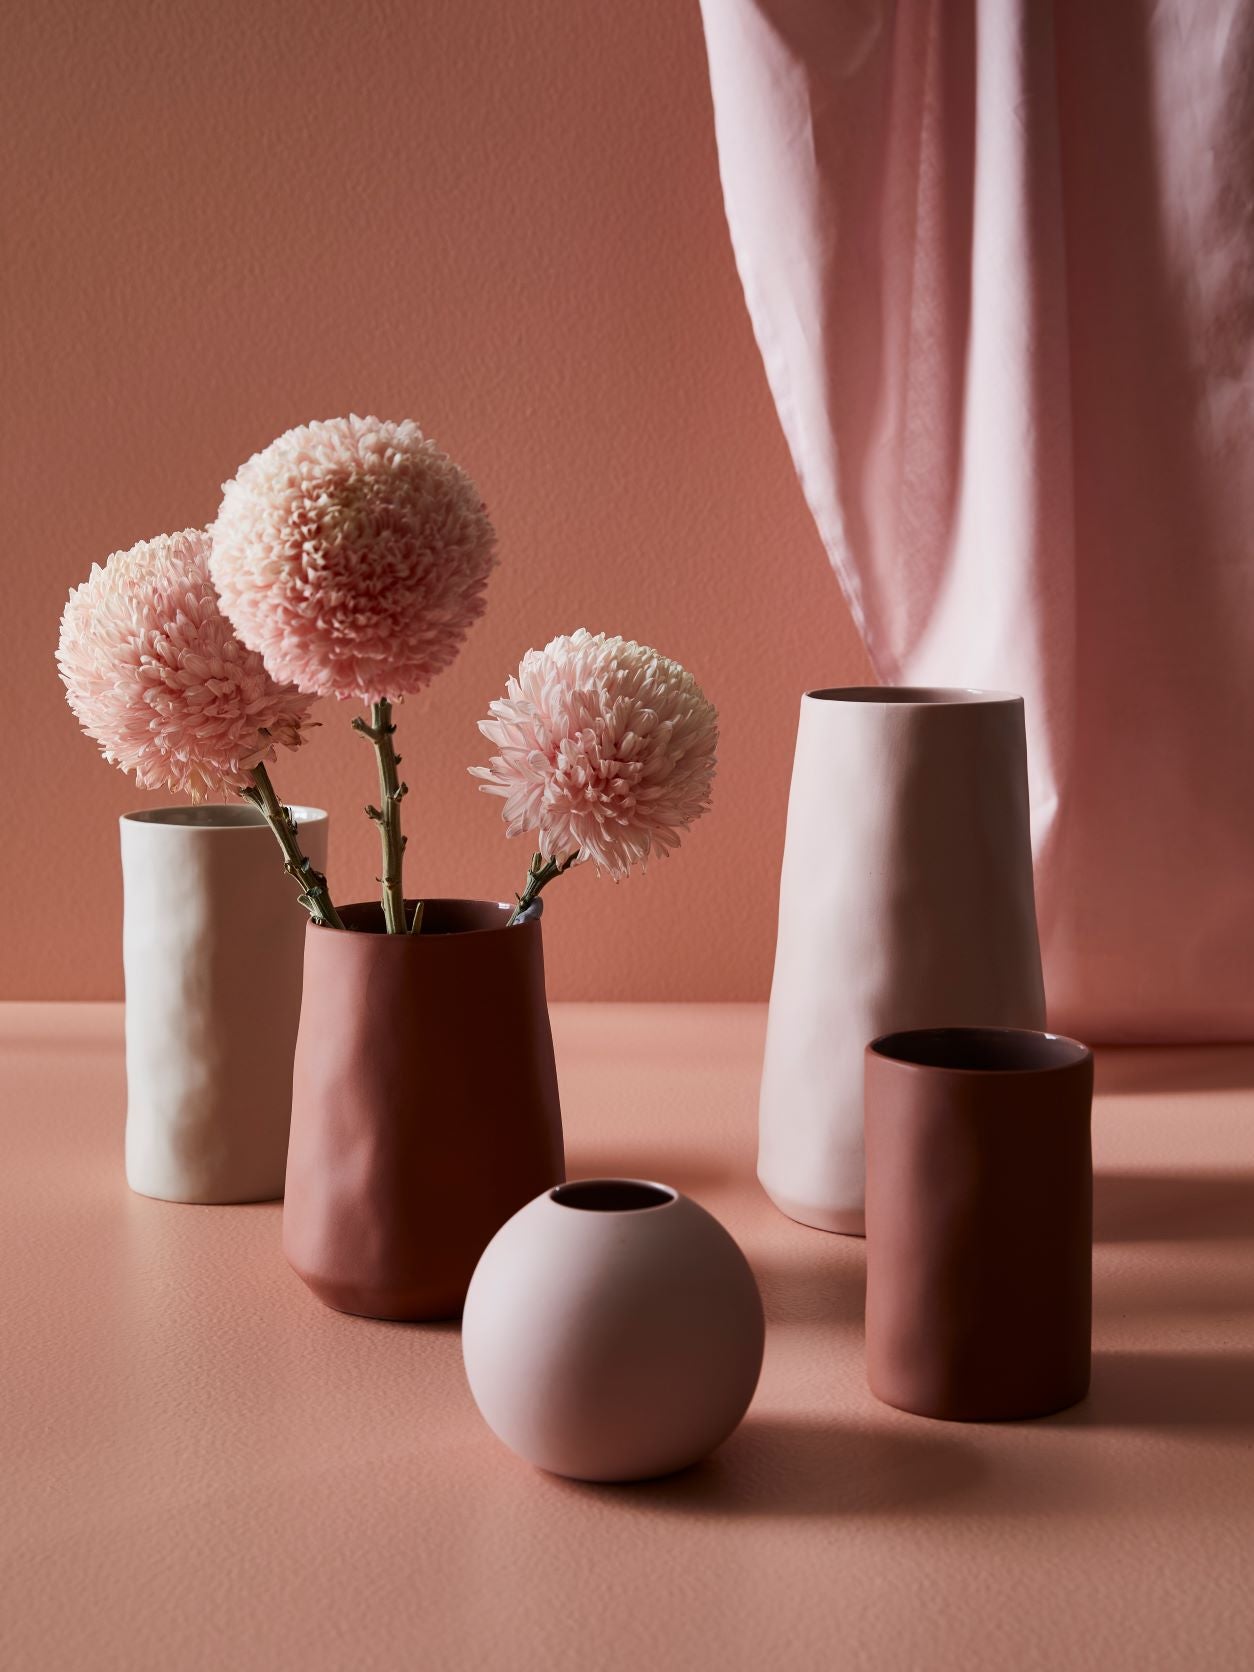 Cloud Tulip Vase Icy Pink (L)